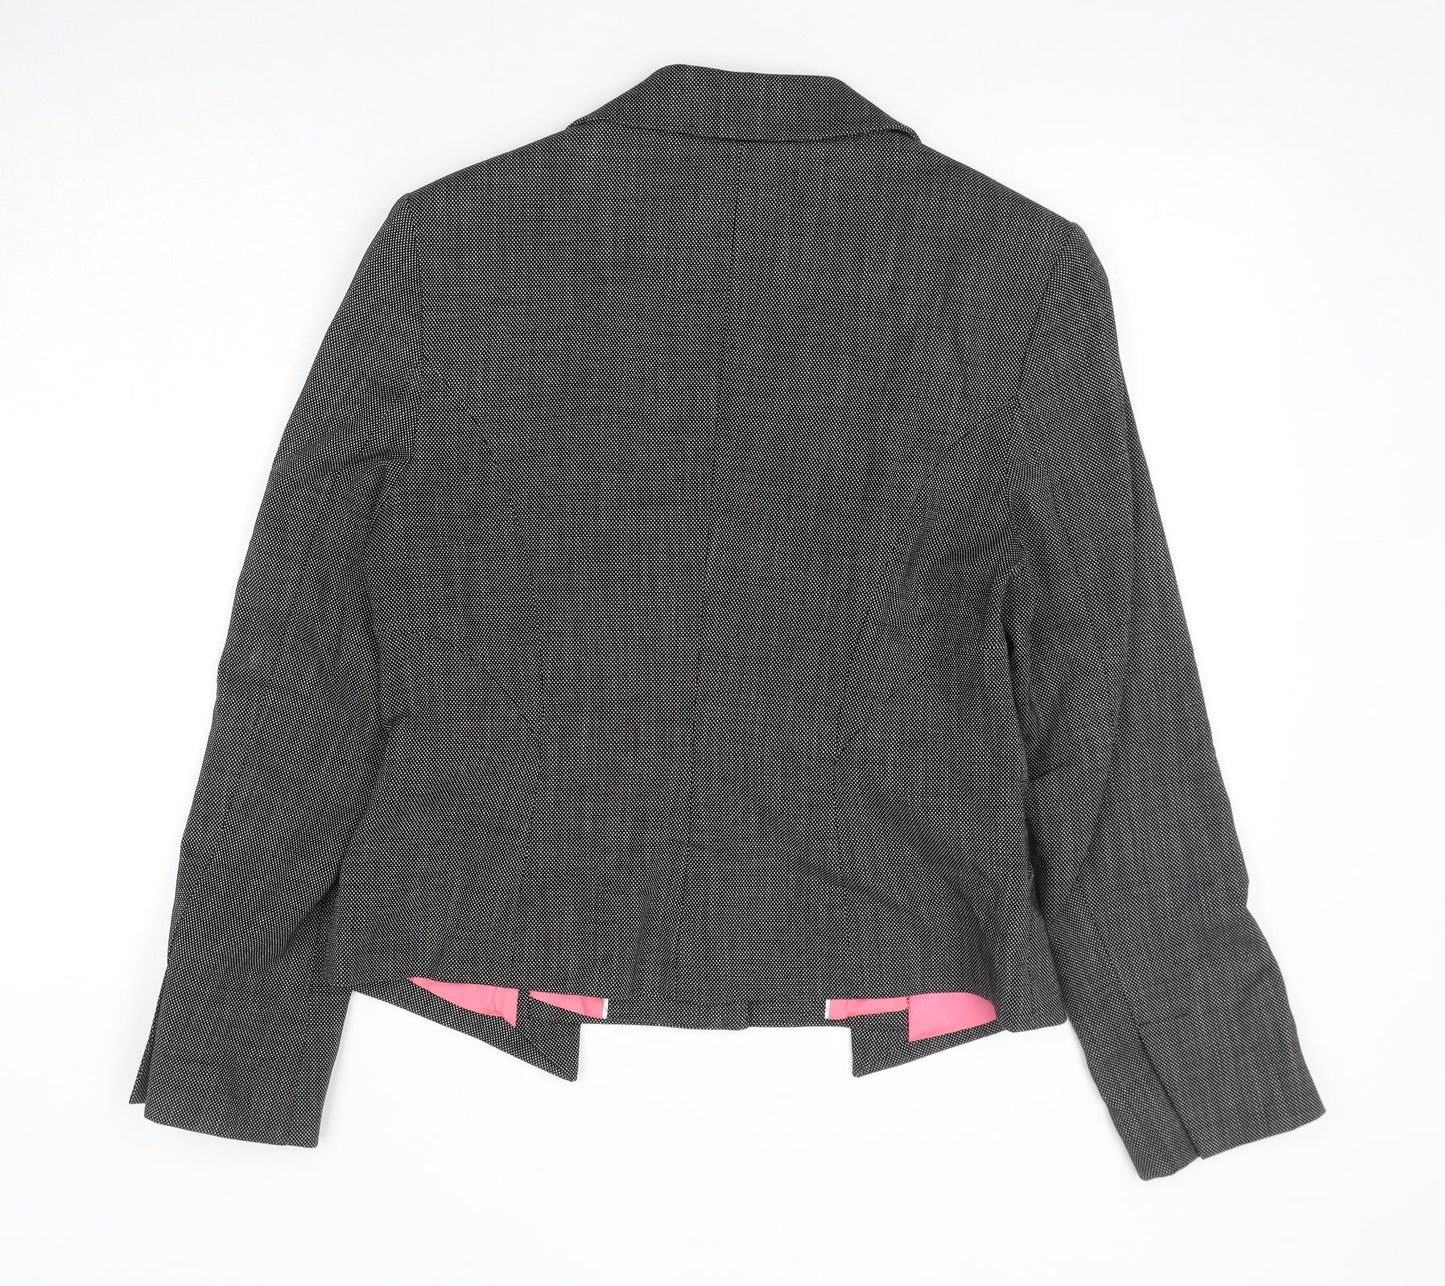 NEXT Womens Black Geometric Jacket Blazer Size 14 Button